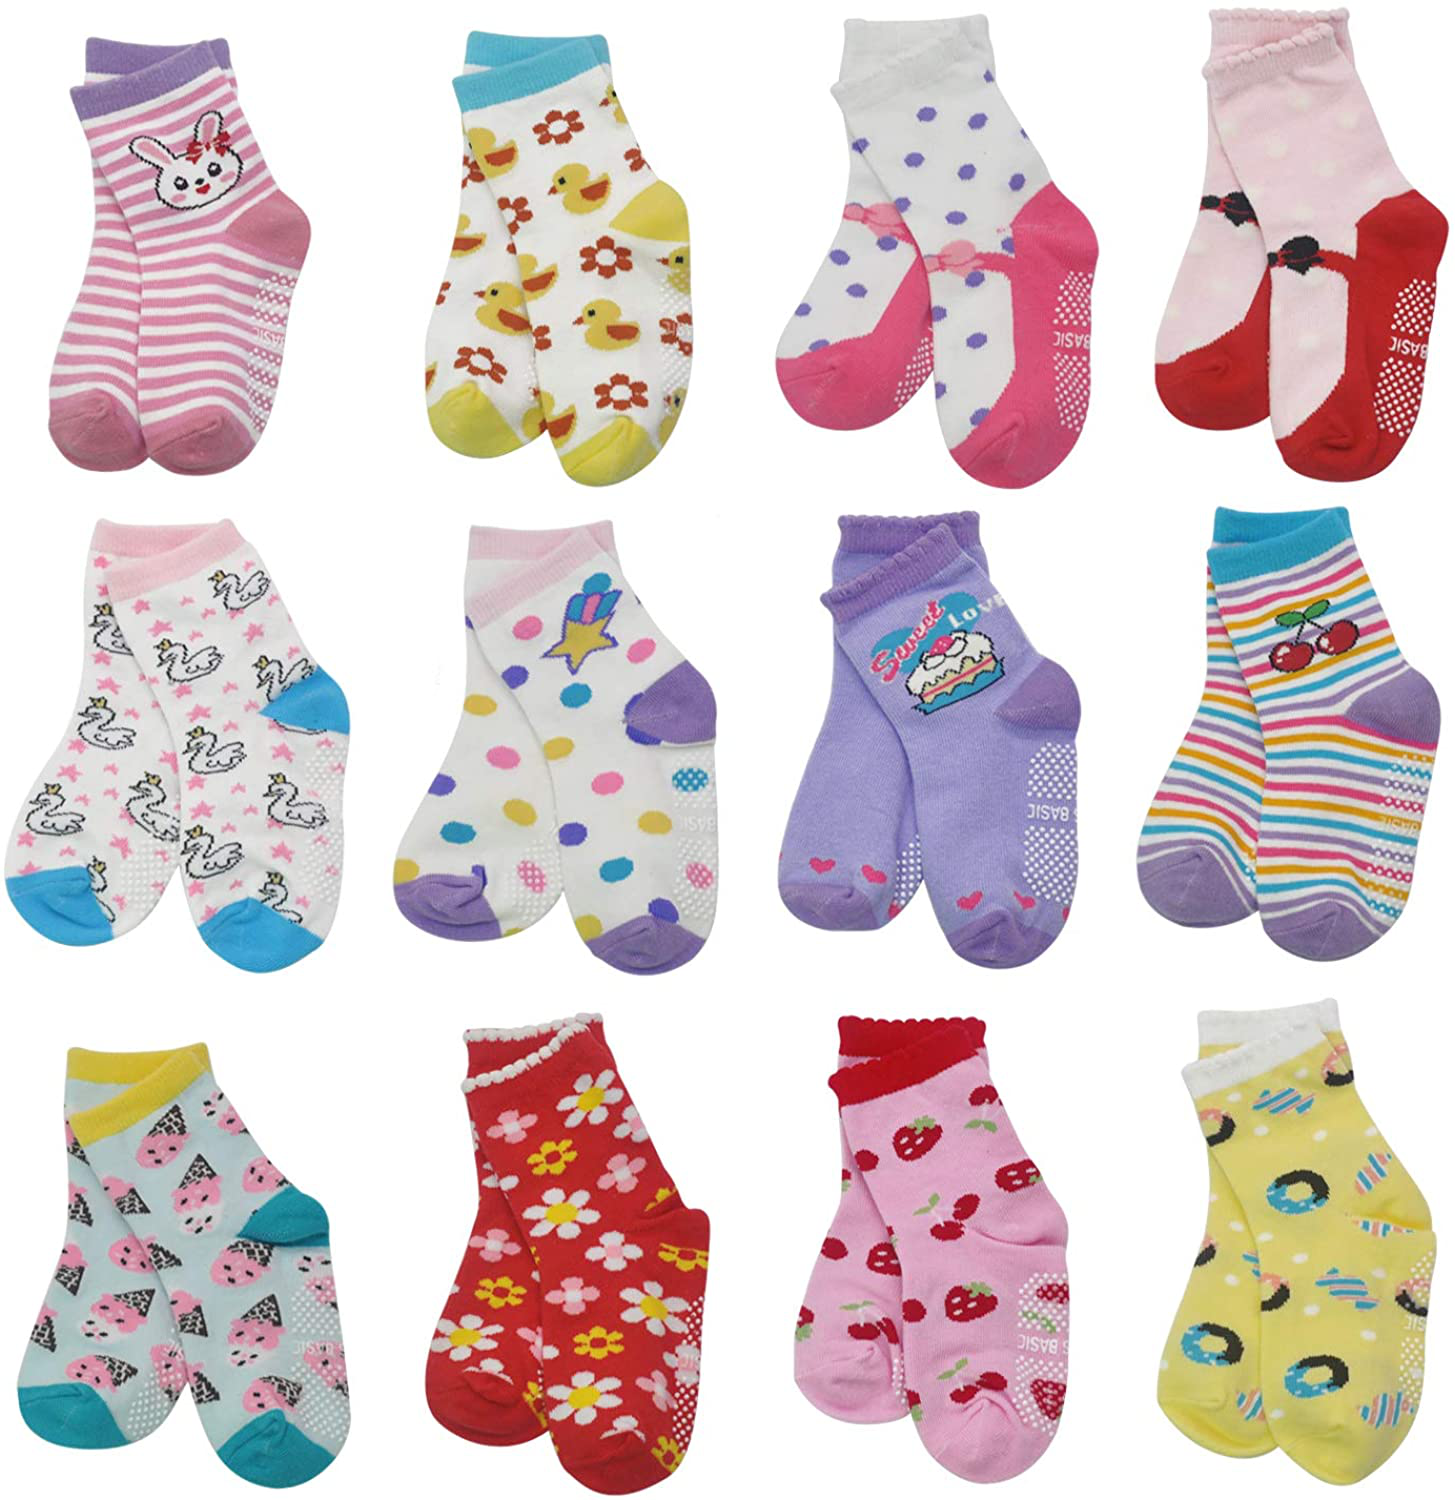 12 Pairs Kids Non Slip Skid Socks Grips Sticky Slippery Cotton Crew Socks for 1-3/3-5/5-7 Years Old Children Youth Boy Girl